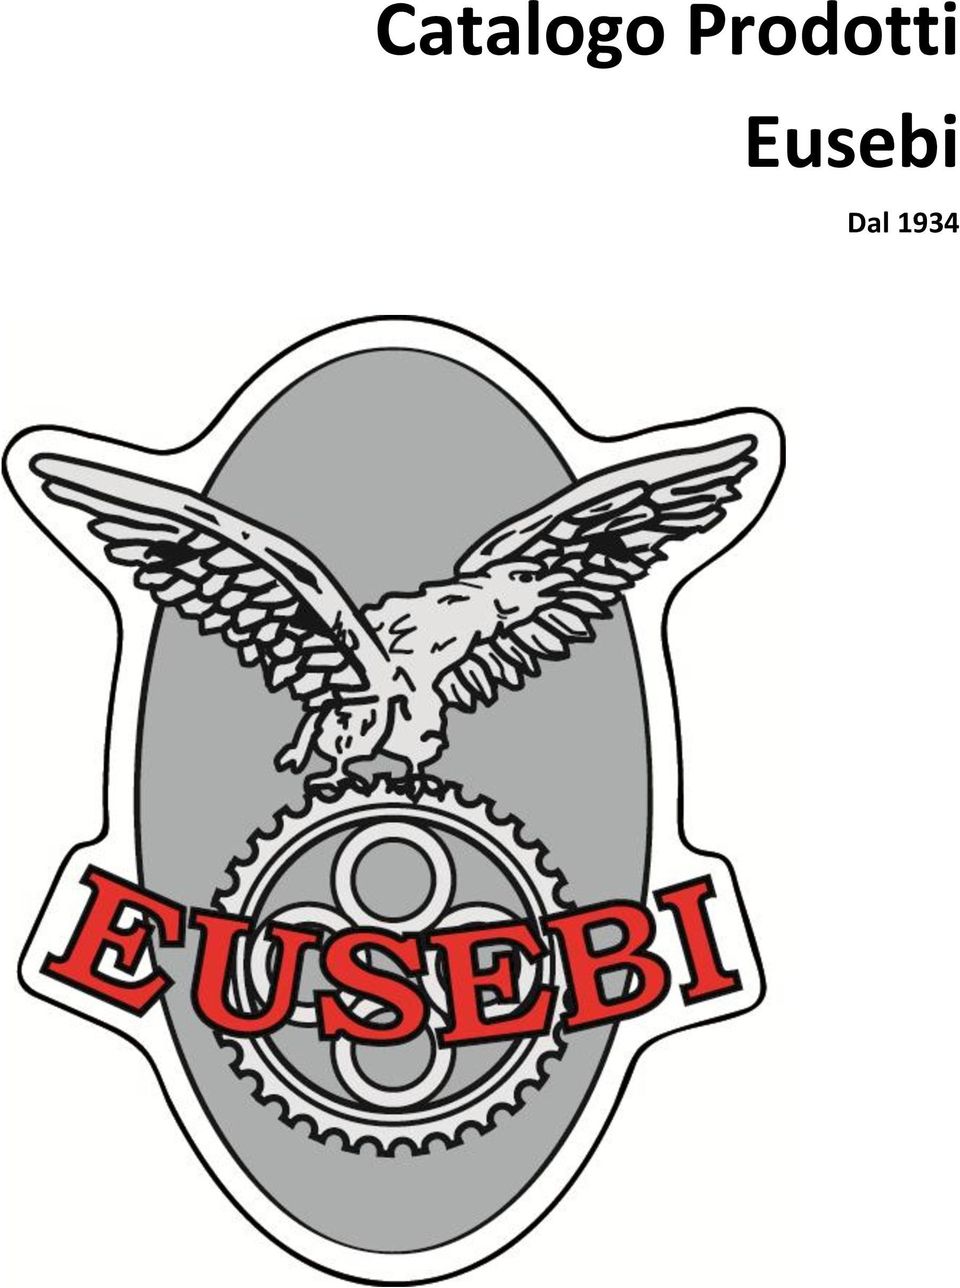 Eusebi